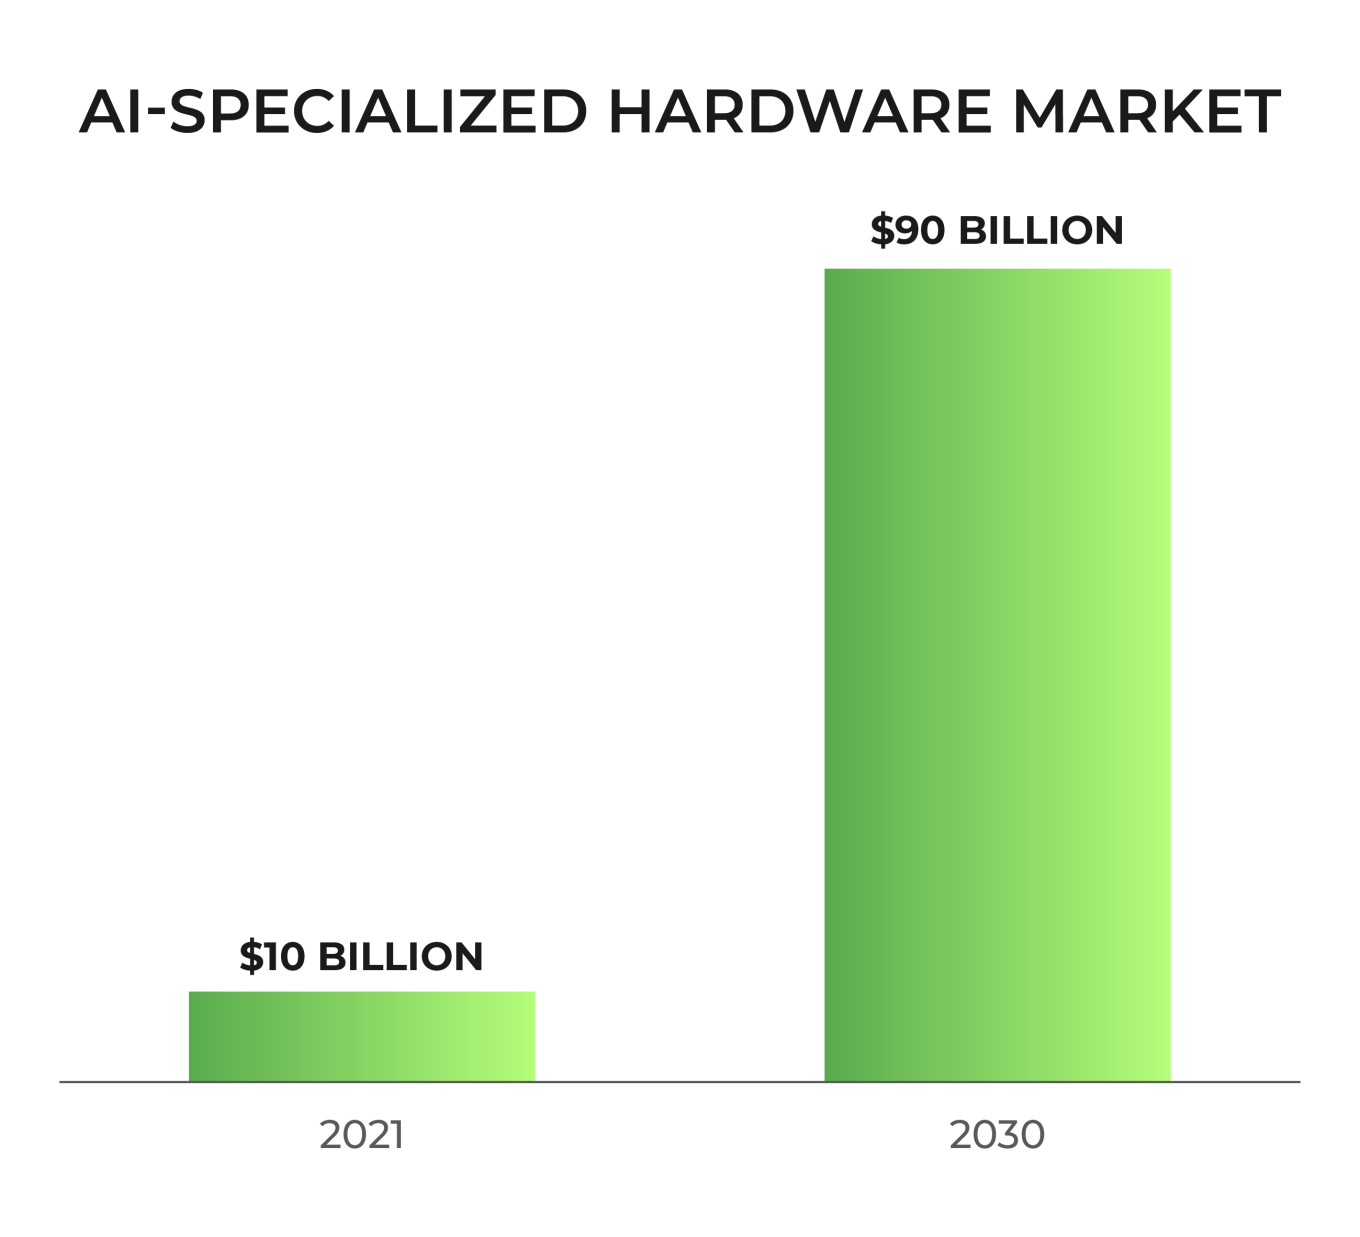 AI Specialized Hardware Market